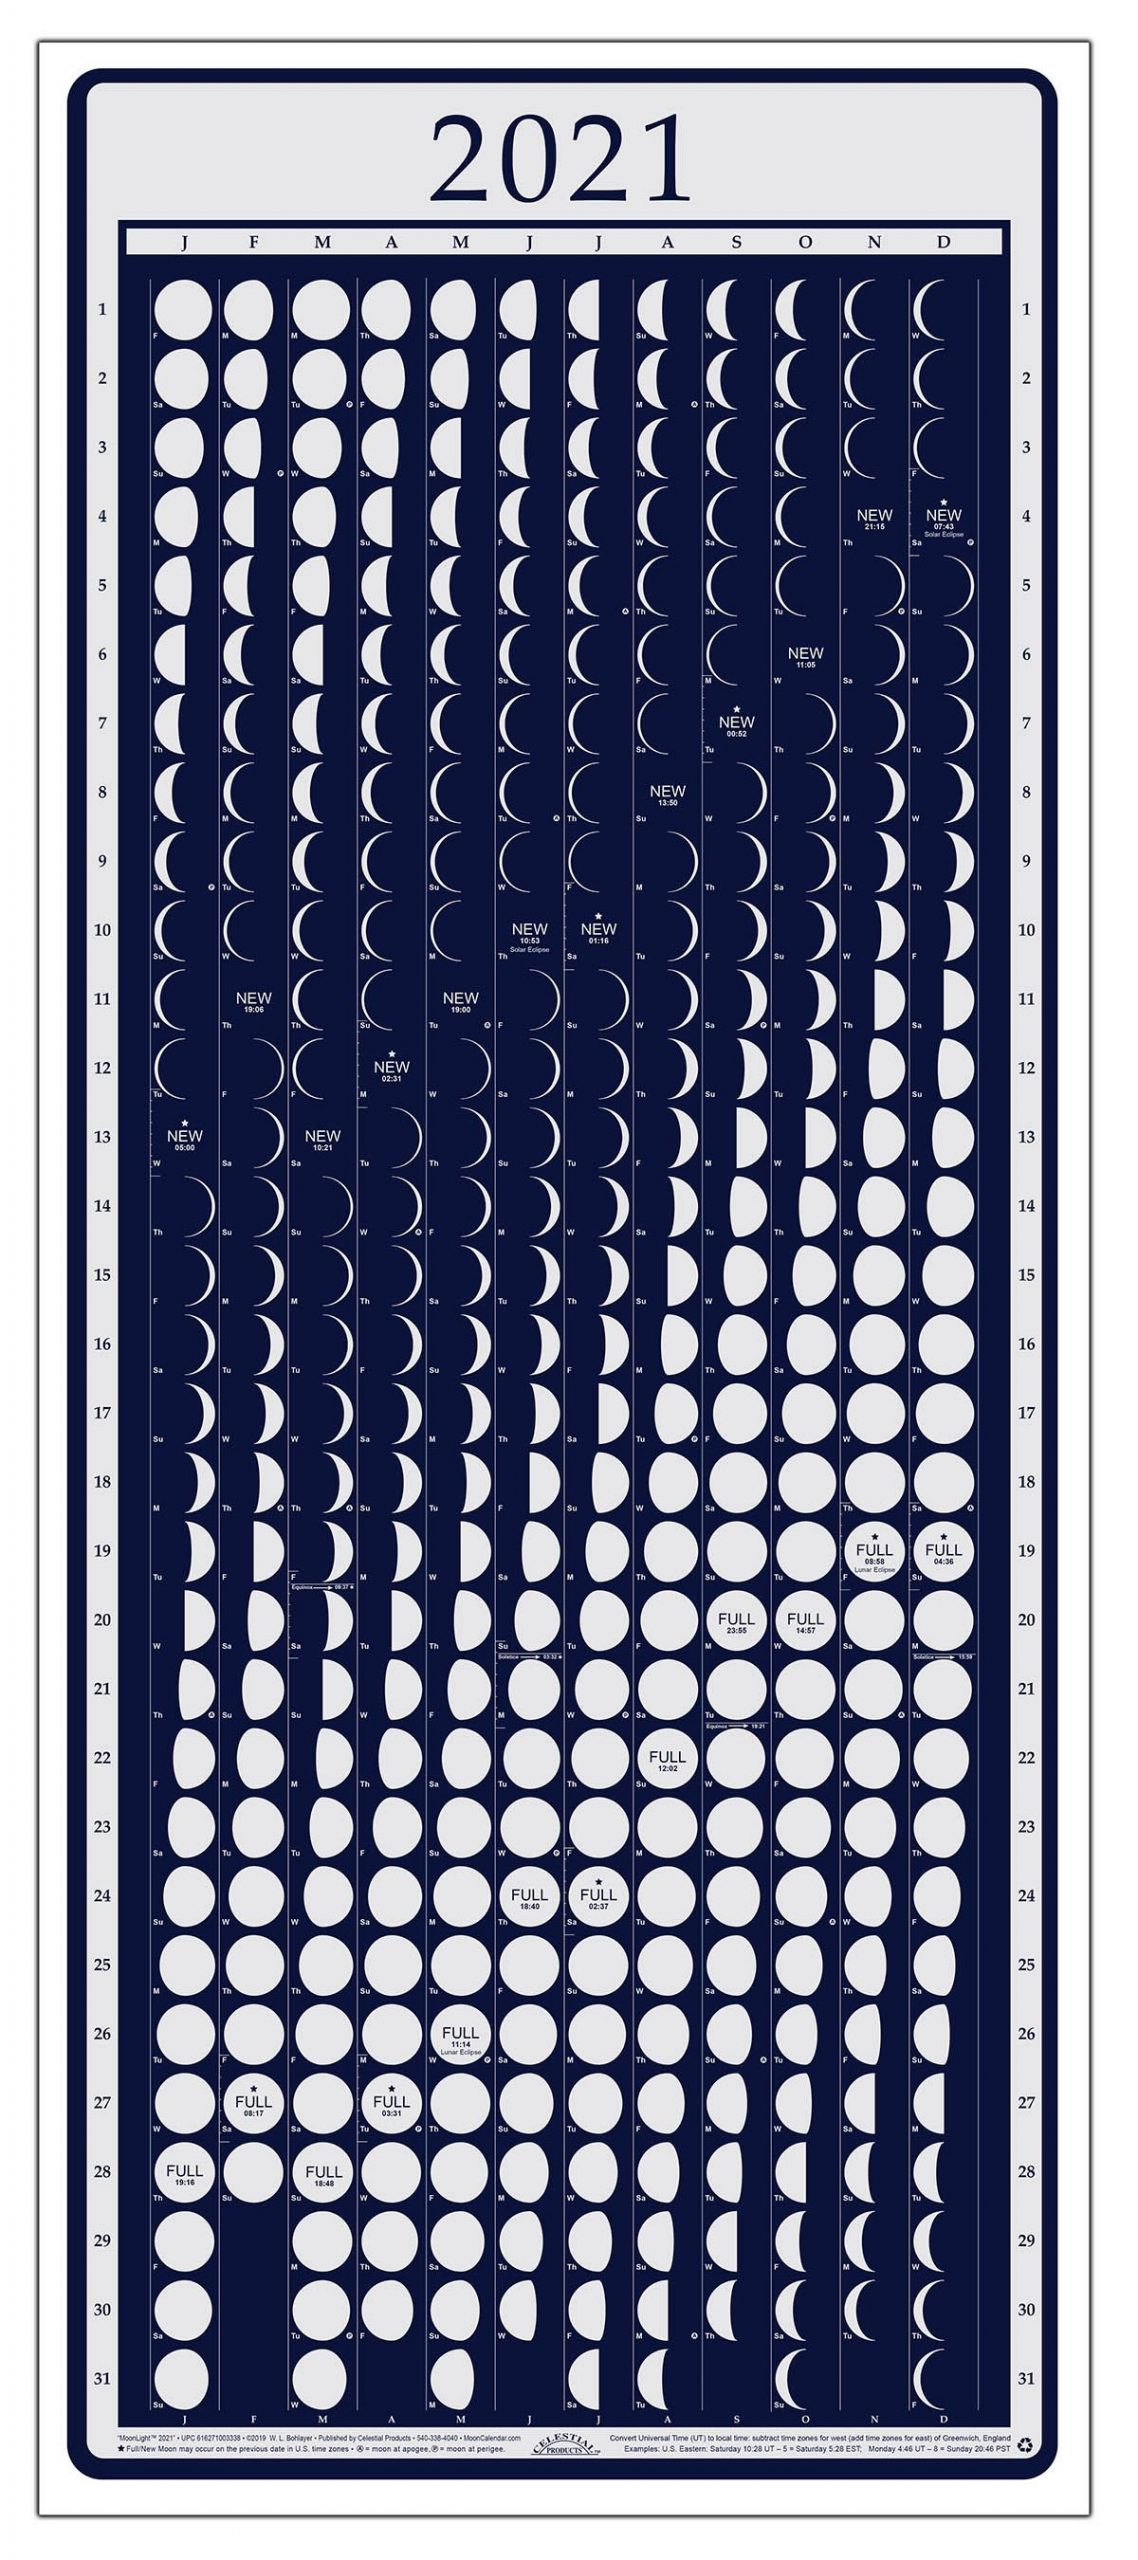 2021 Moonphase Calendar